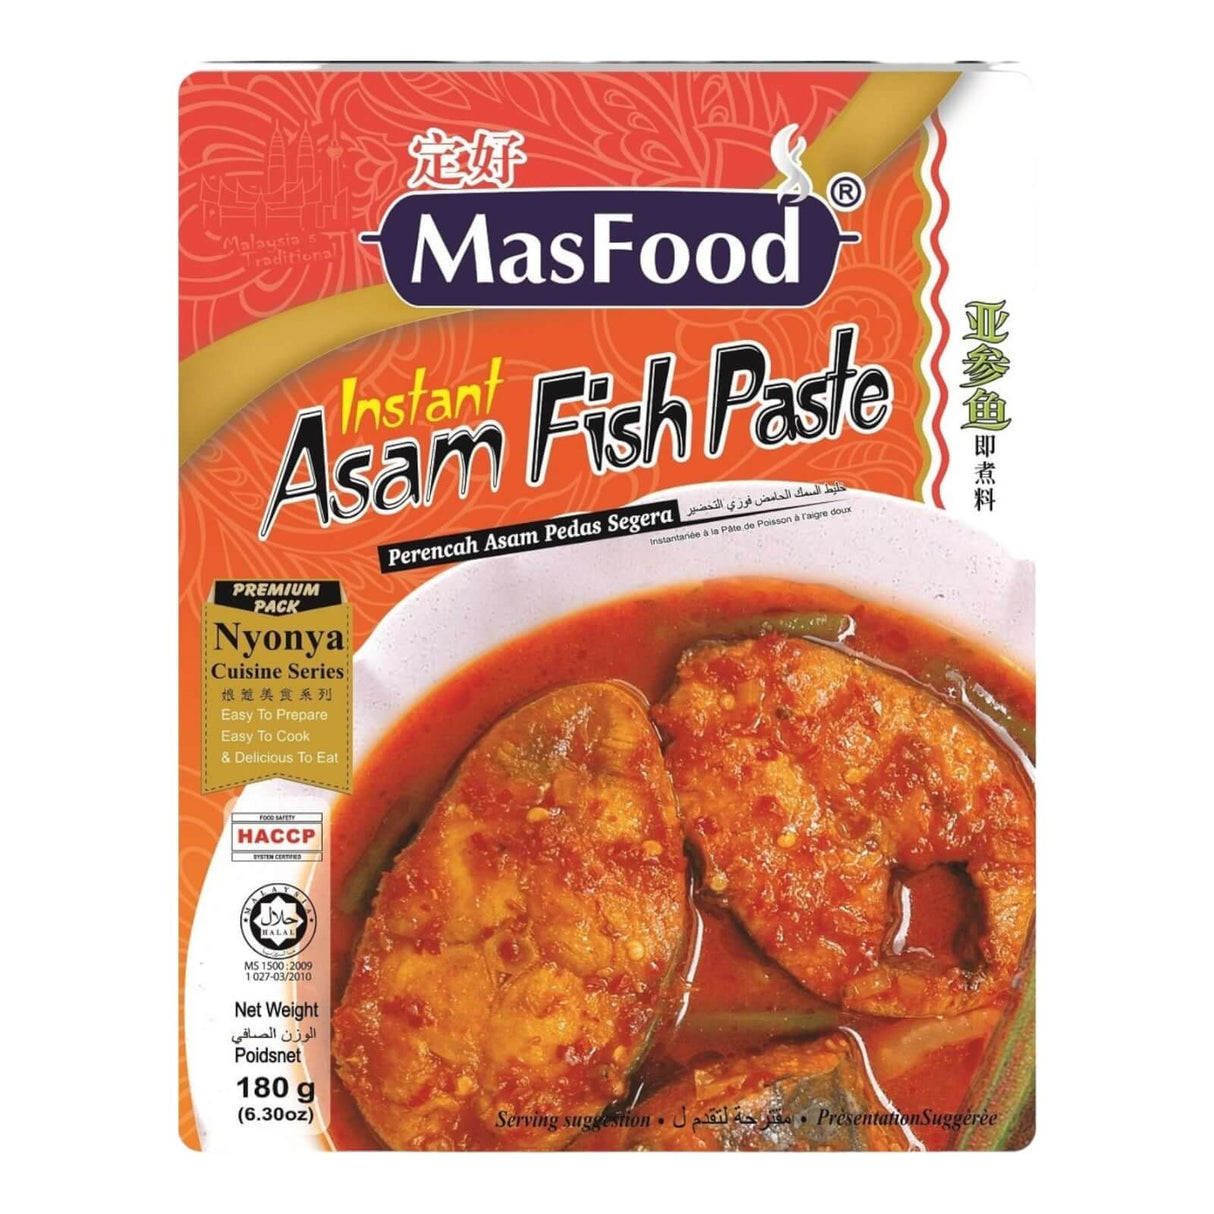 MasFood Instant Asam Fish Paste